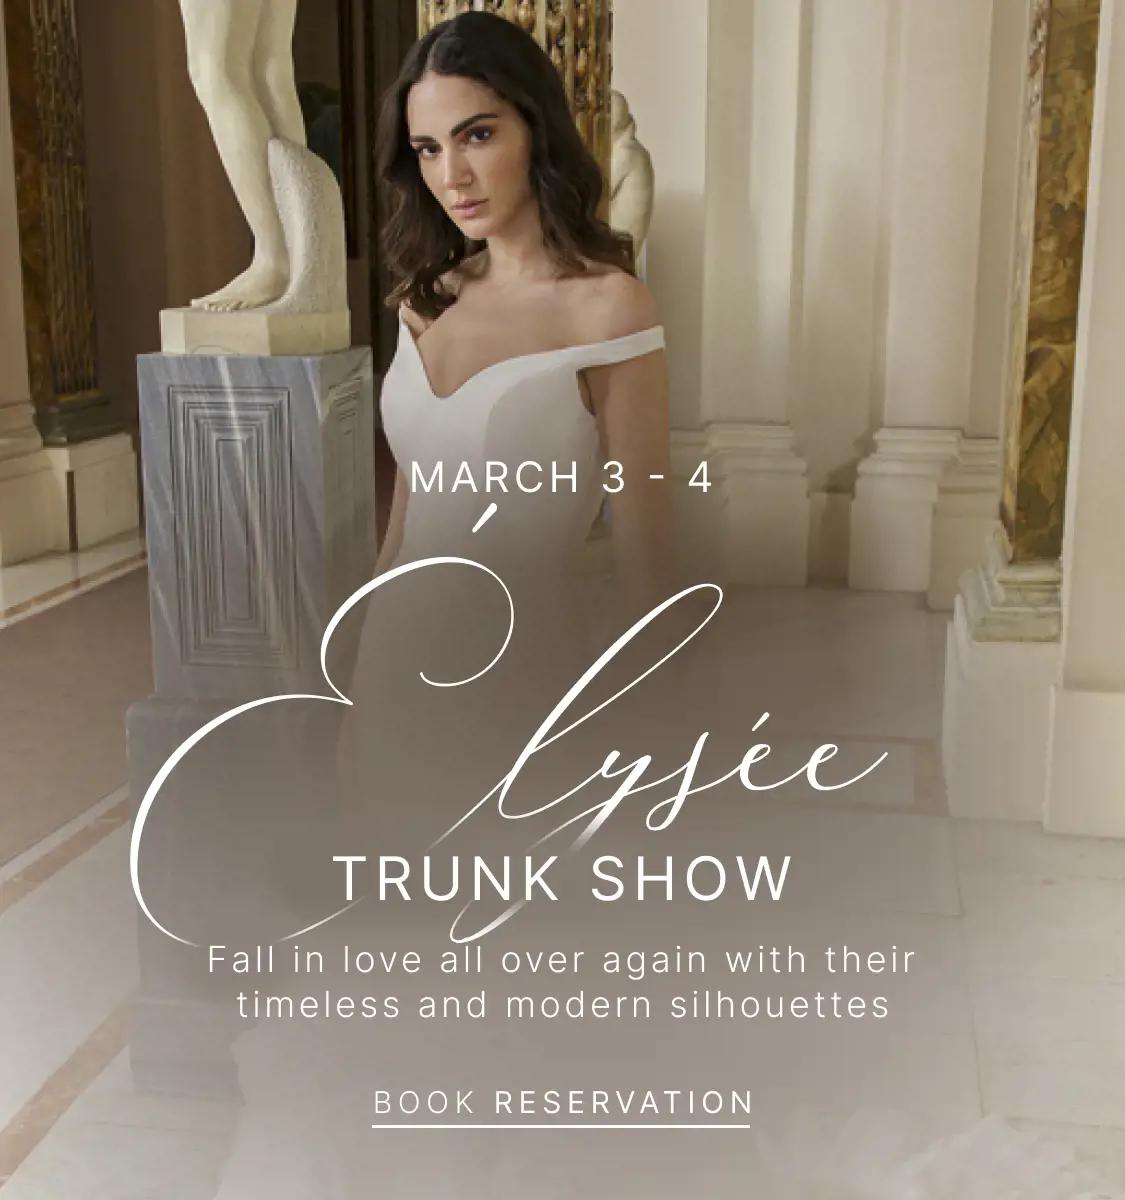 Elysee Trunk Show at Linen Jolie in LA